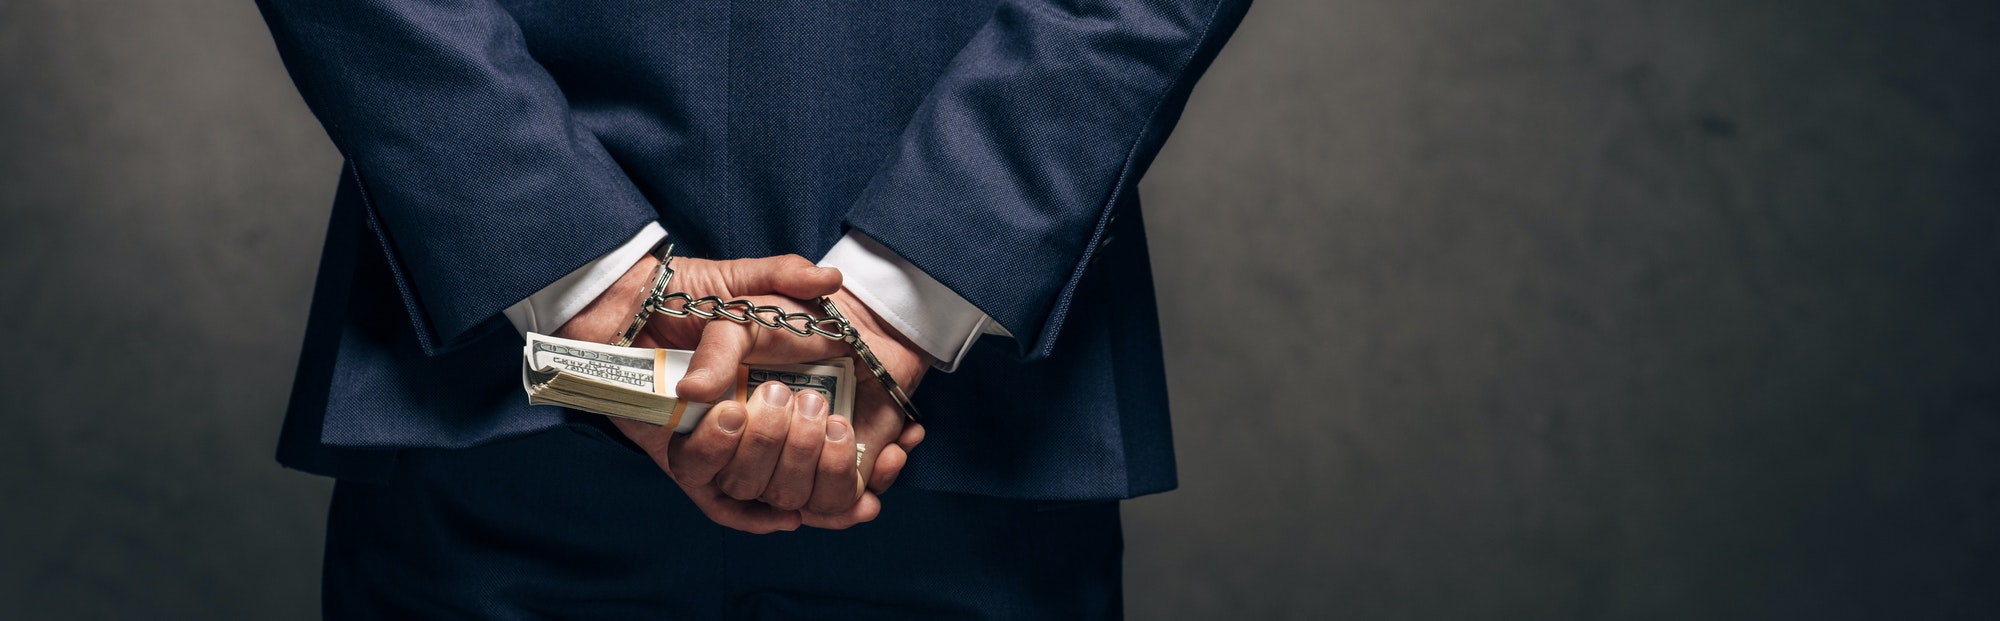 panoramic shot of handcuffed man holding bribe on grey